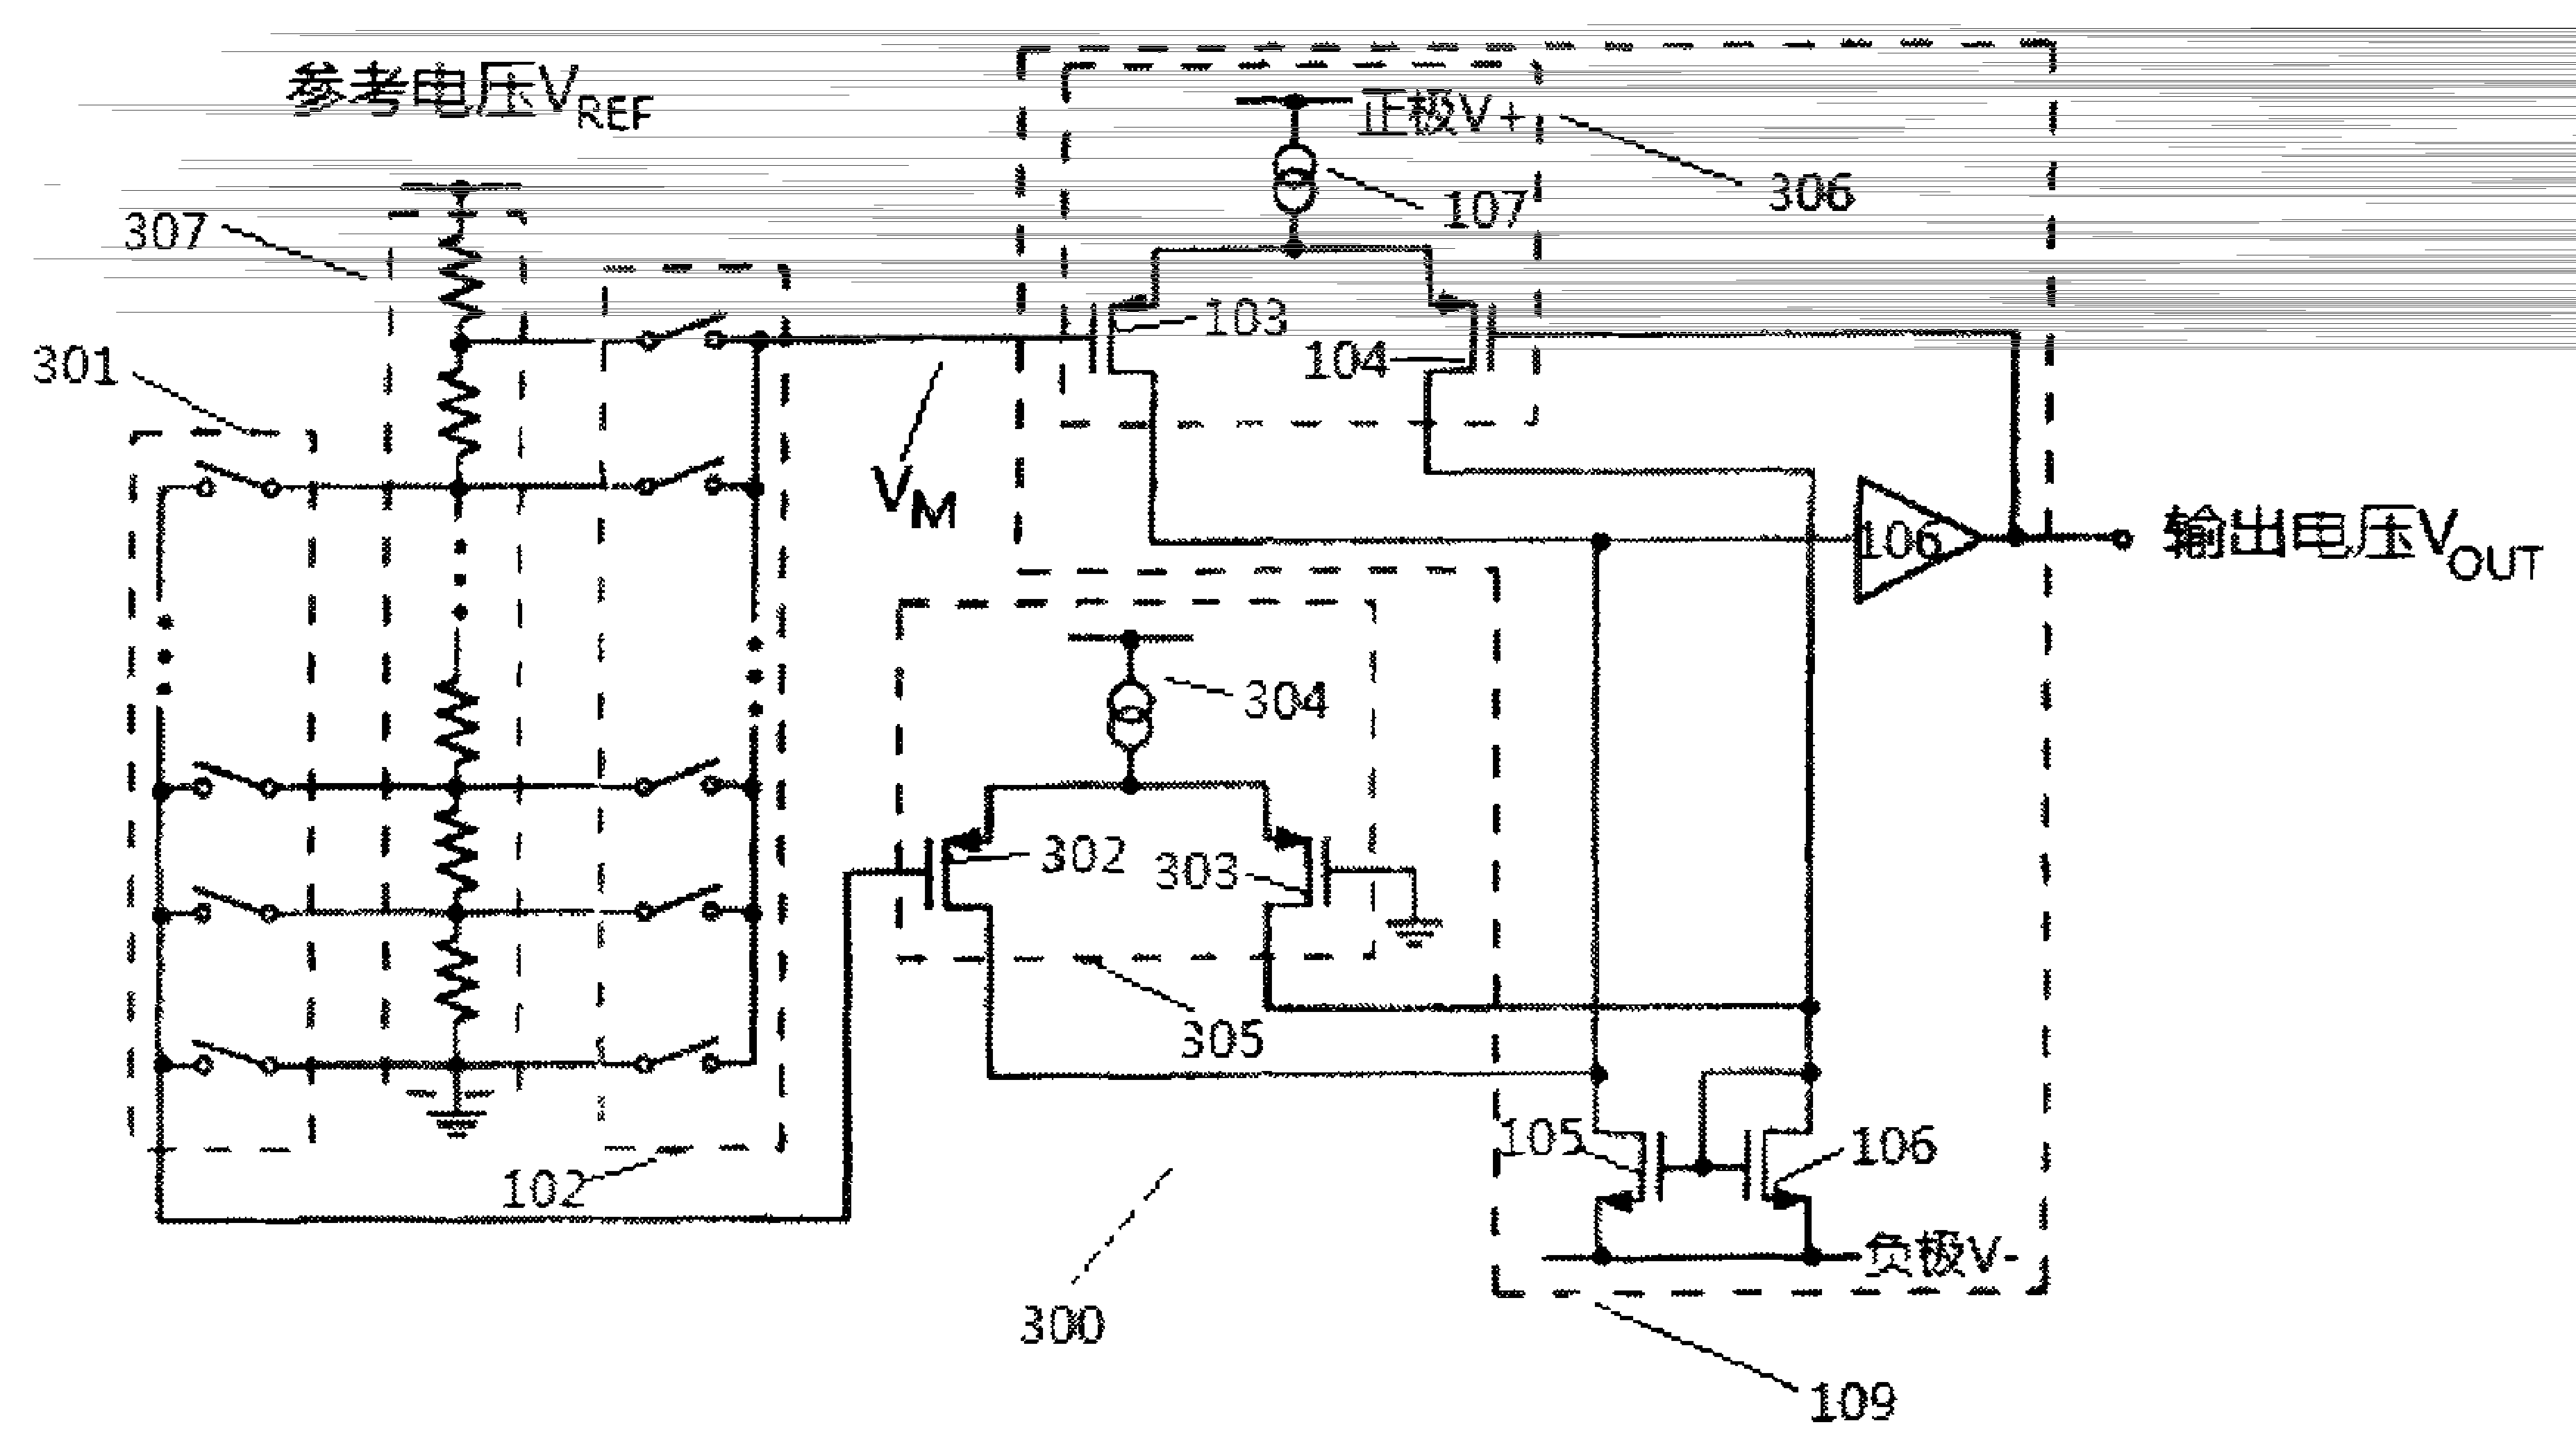 Digital-to-analog convertor